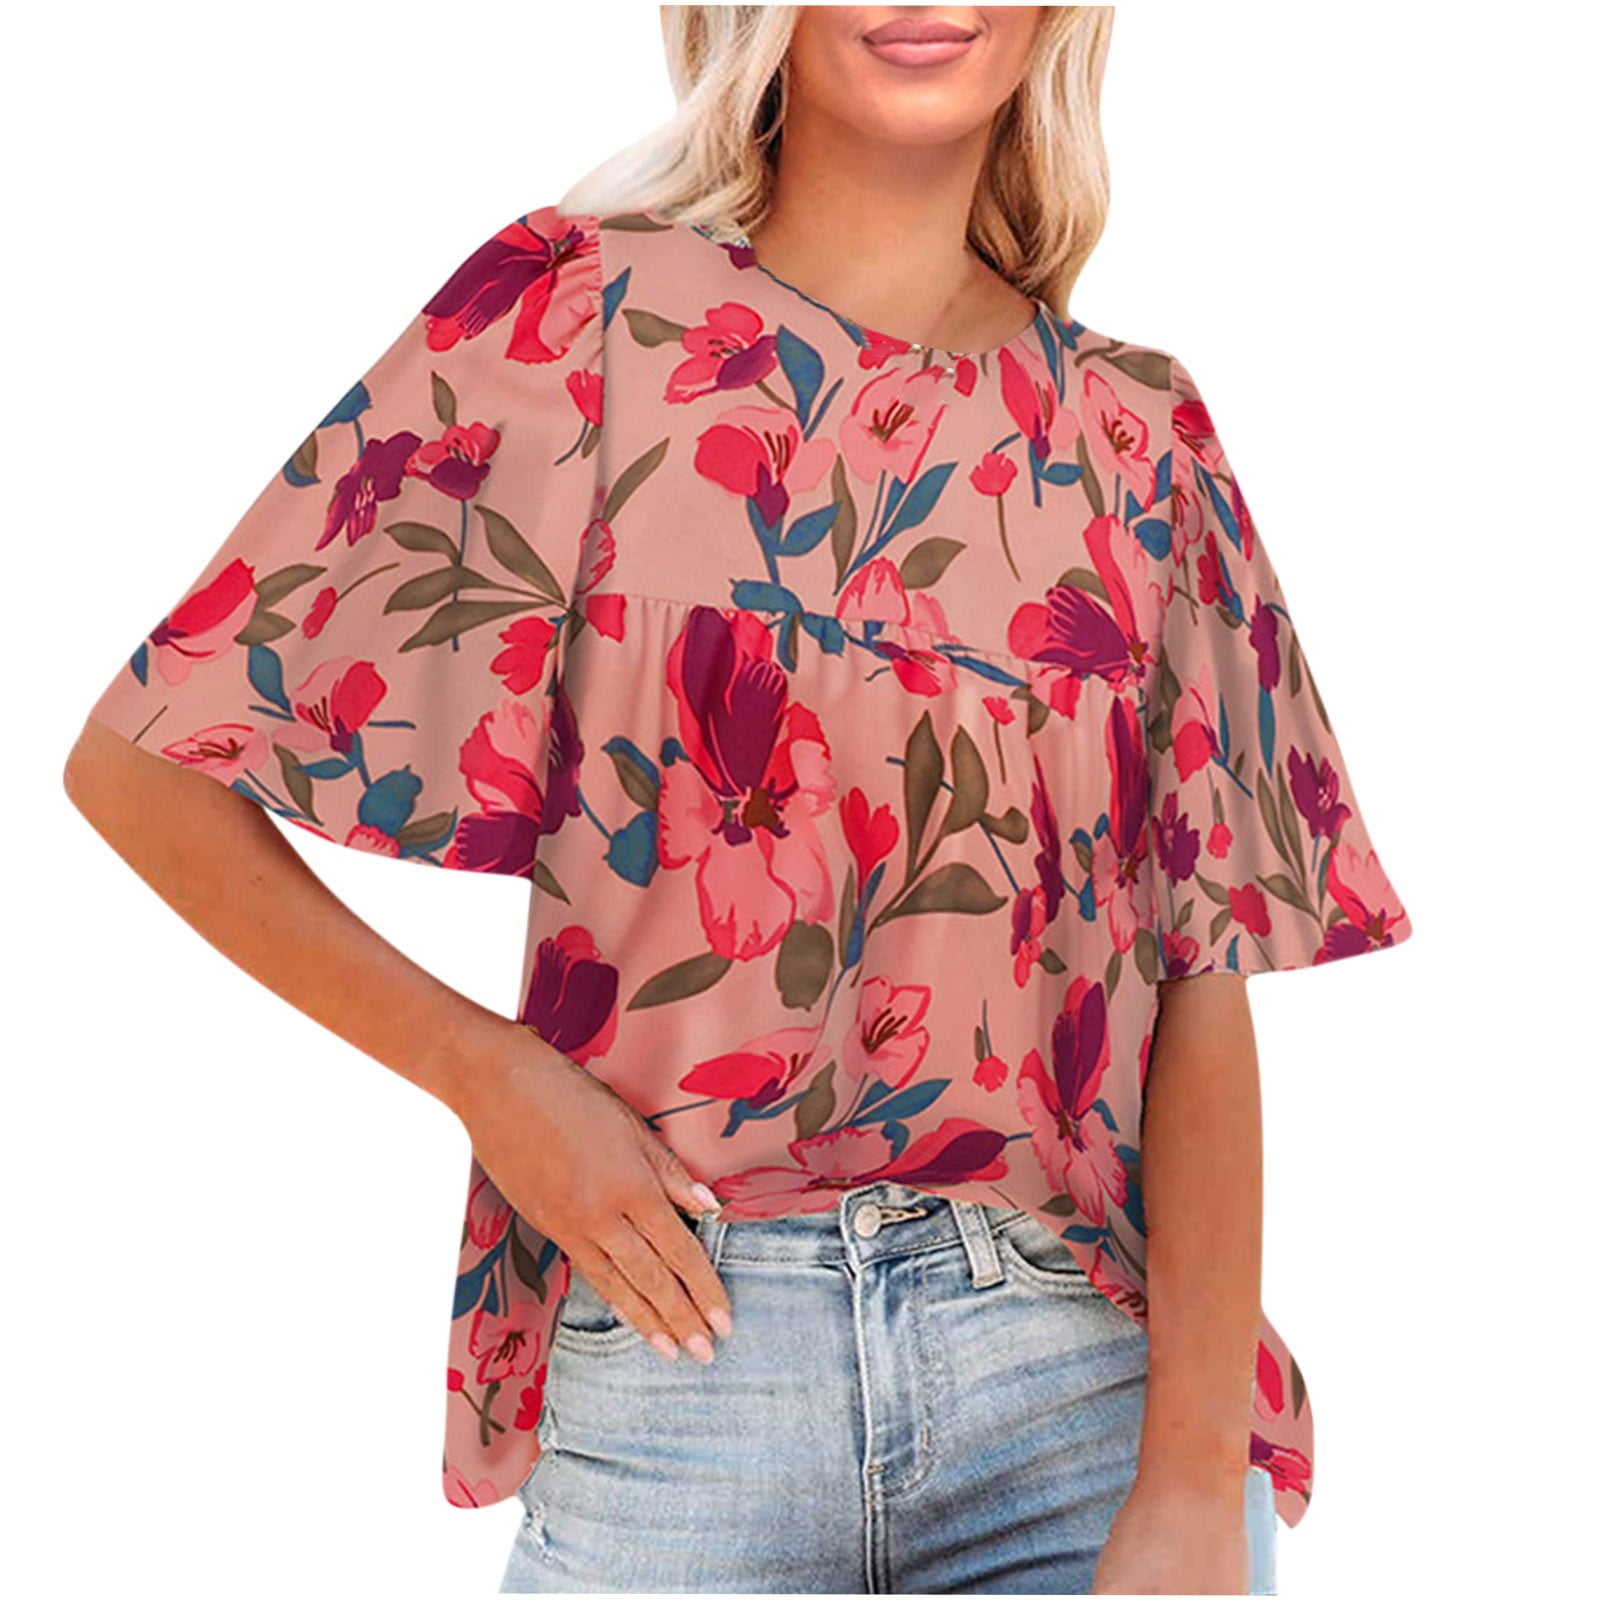 Yyeselk Women's Summer Casual Boho Blouse Crewneck Batwing Half Sleeve T- Shirts Fancy Floral Print Loose Fit Cute Basic Flowy Tops Tees Hot Pink XL  